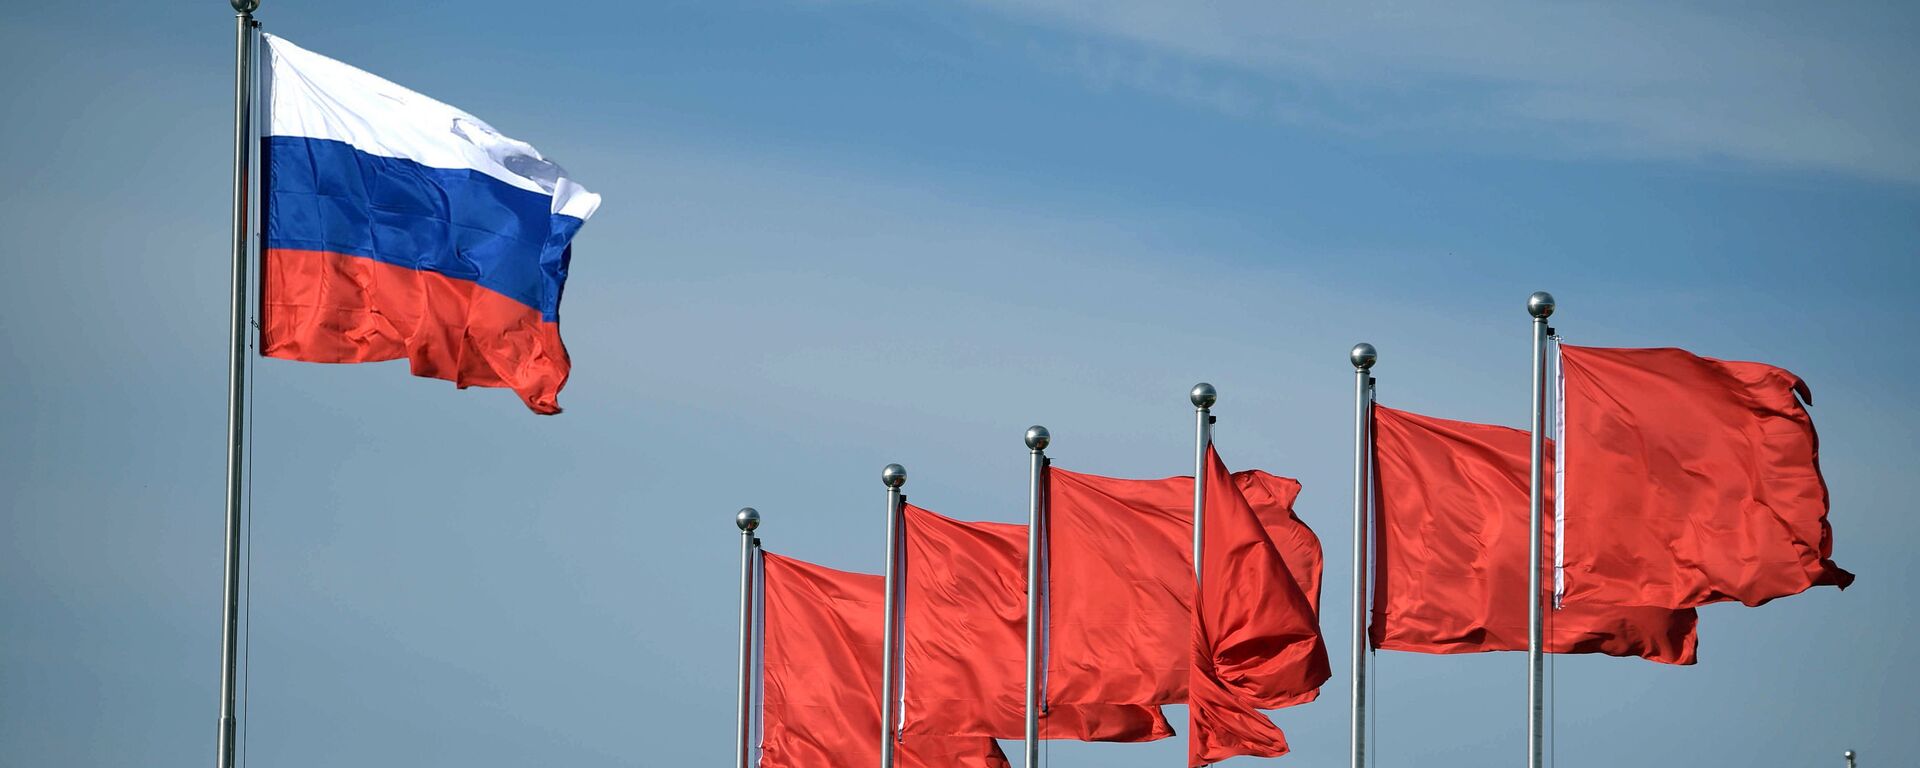 Флаг России и флаги КНР - Sputnik Латвия, 1920, 07.09.2019